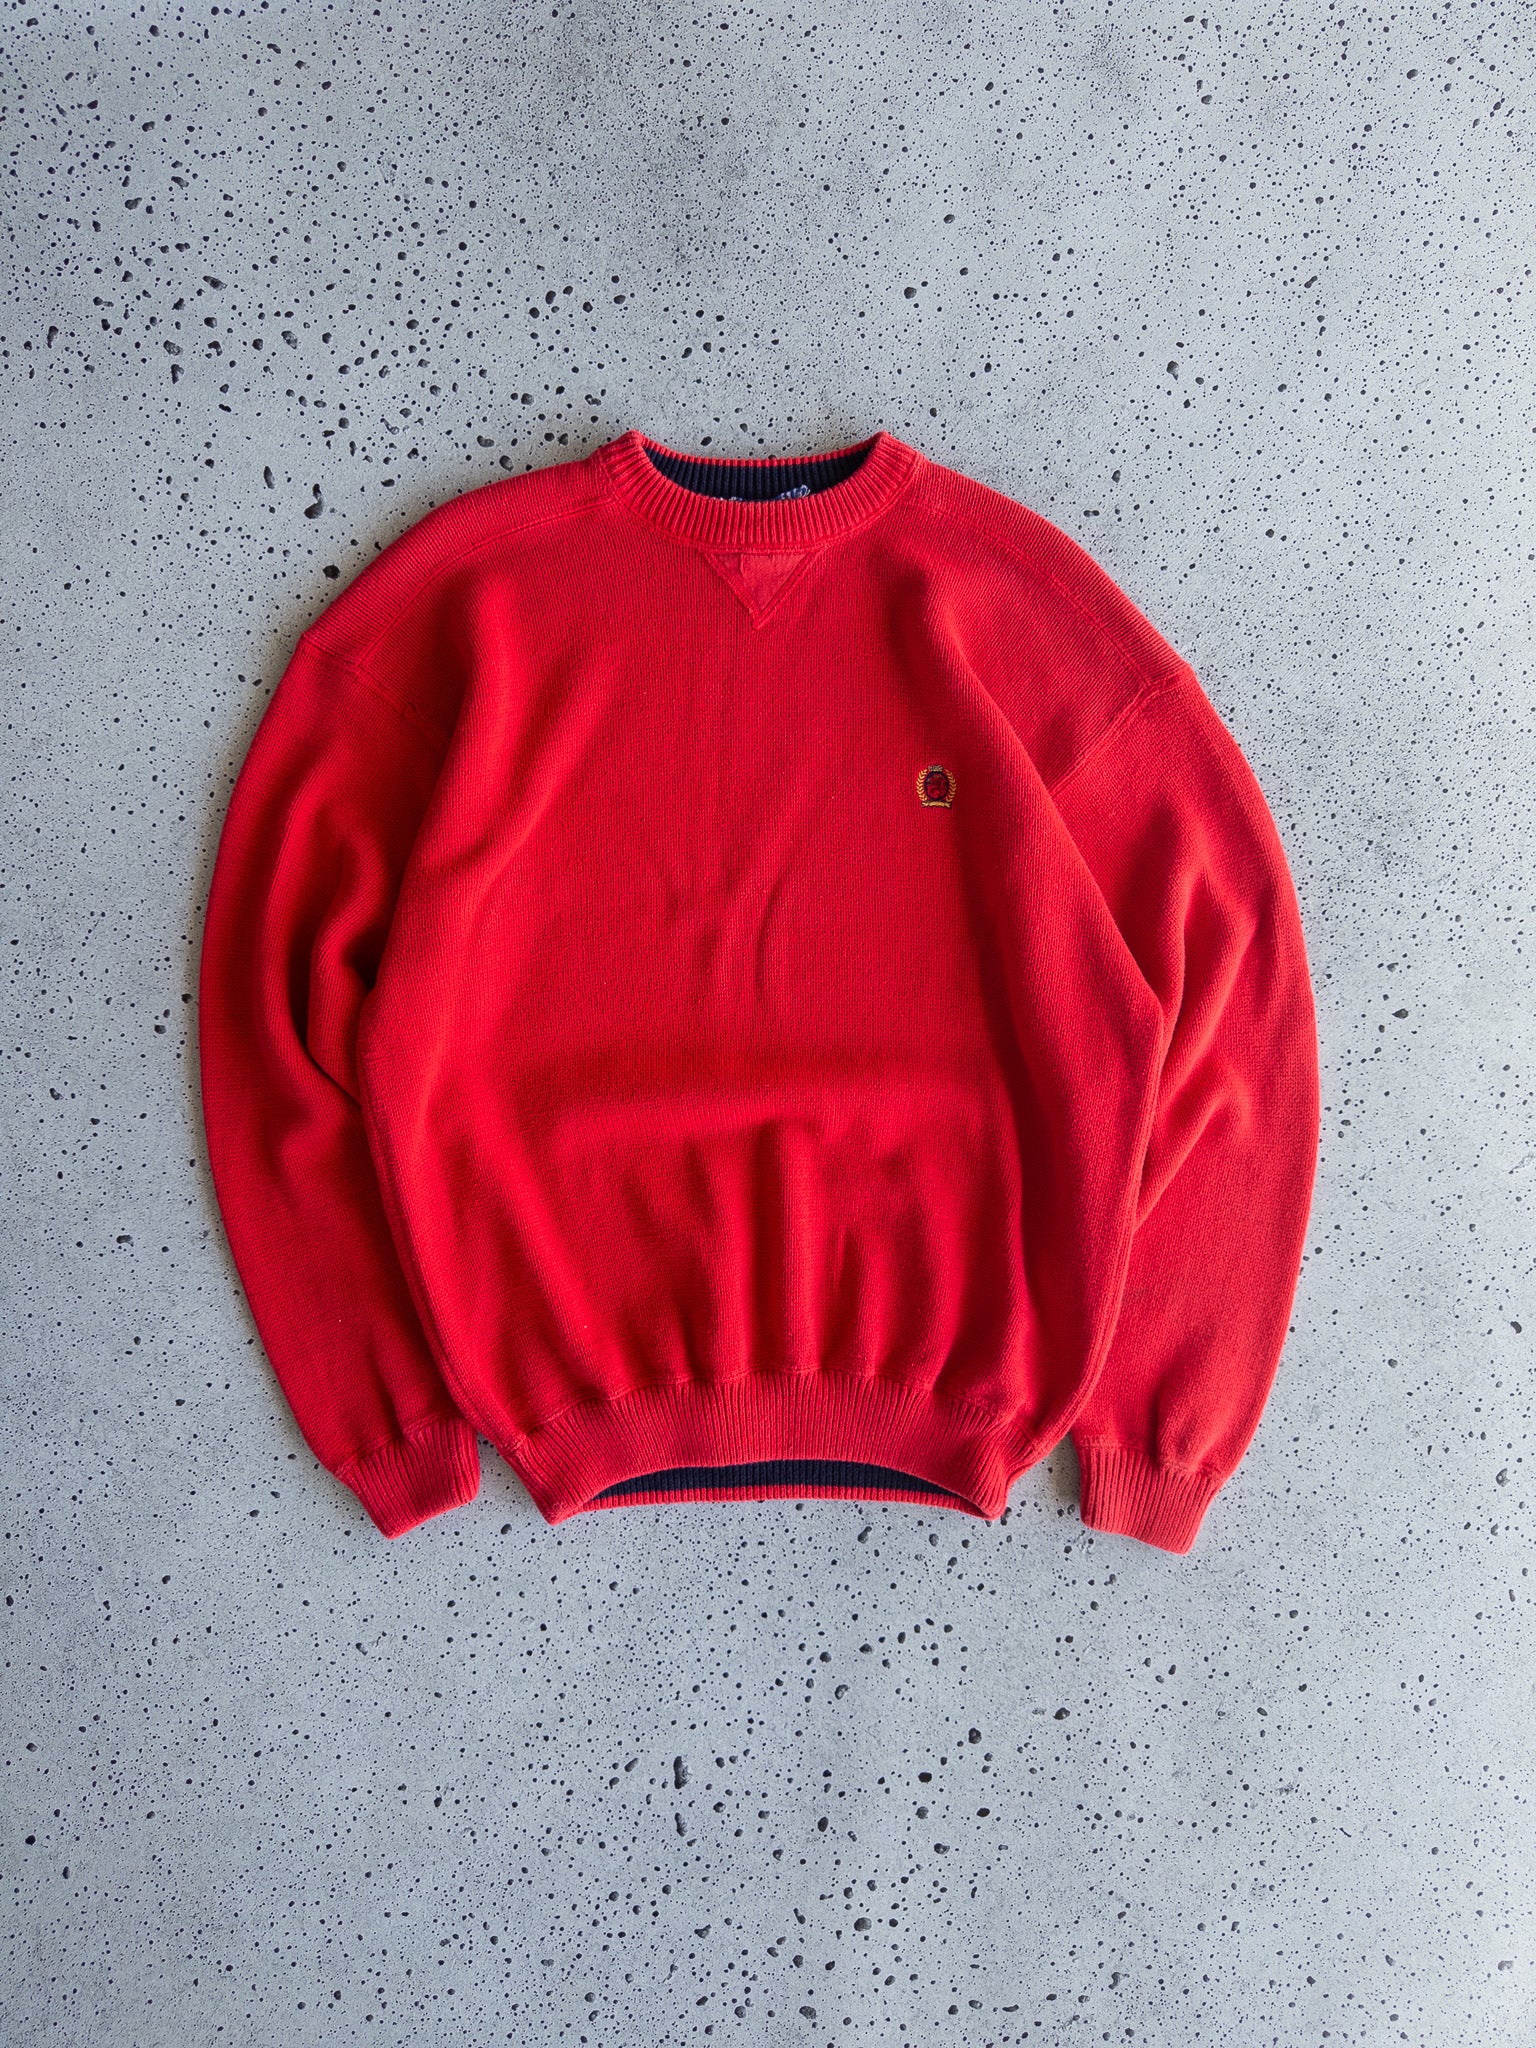 Vintage Ralph Lauren Knit Sweatshirt (XL)